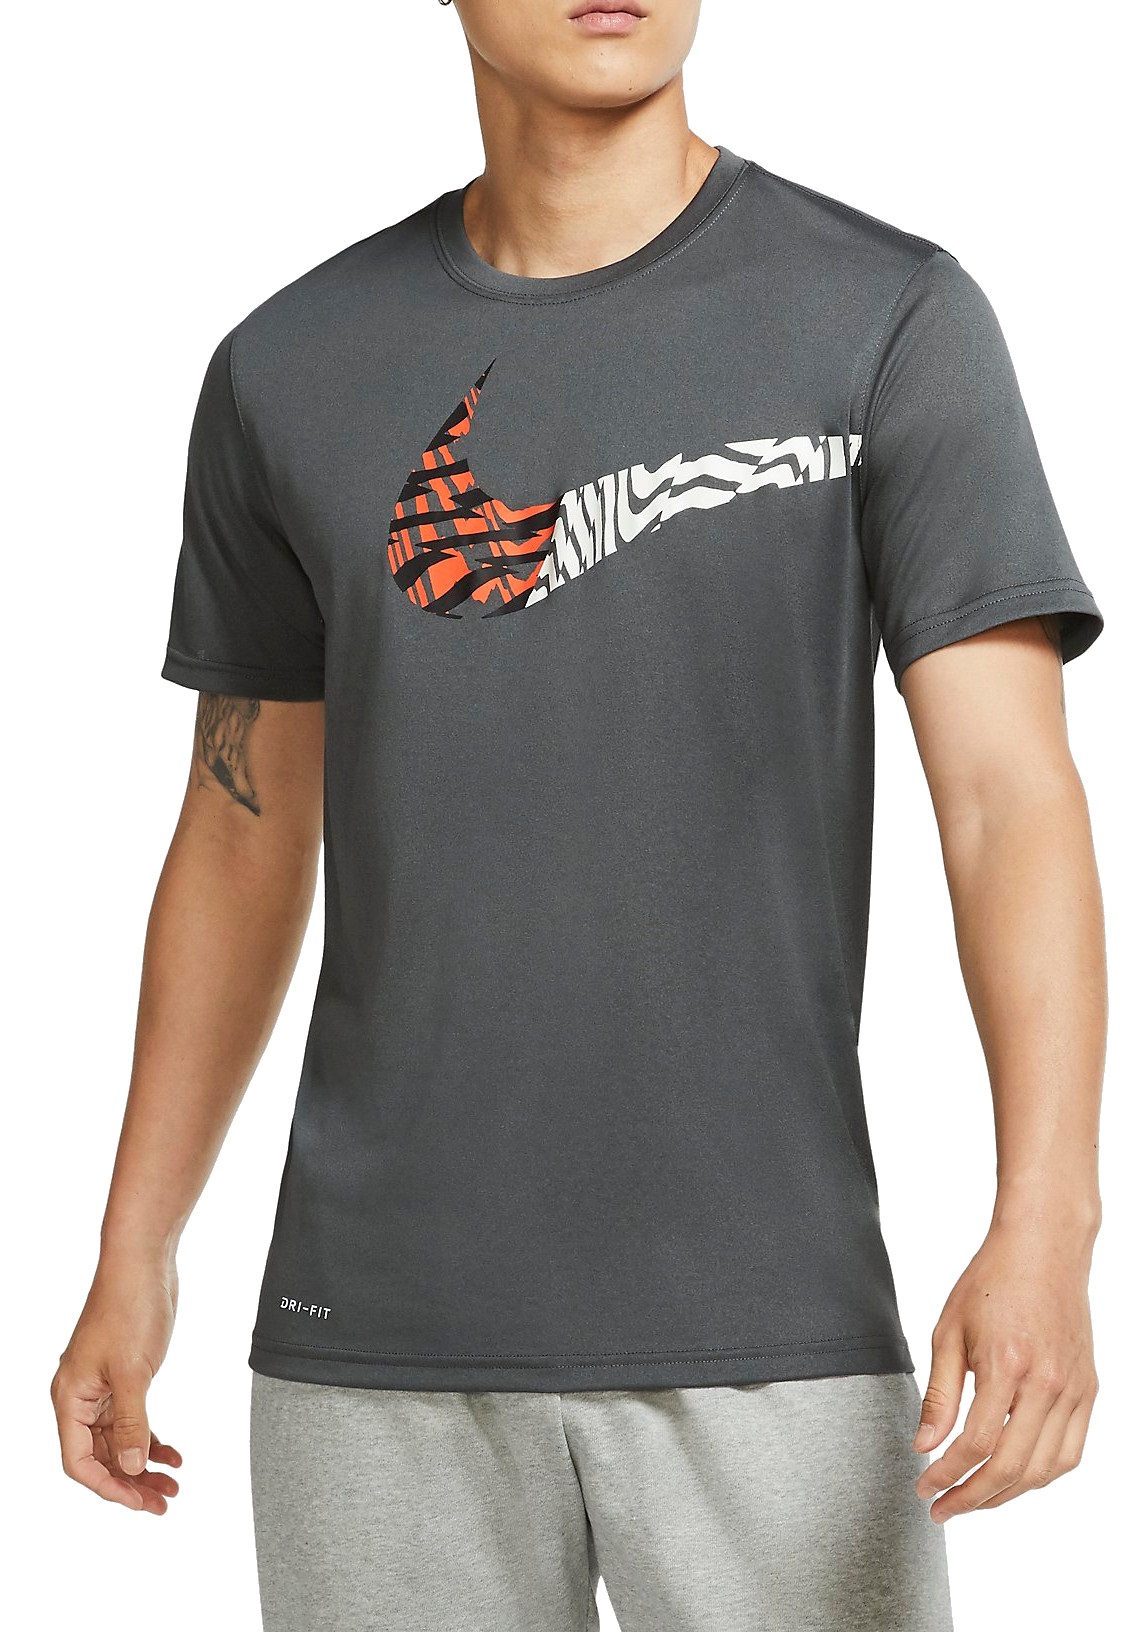 T-shirt free Nike swoosh 8